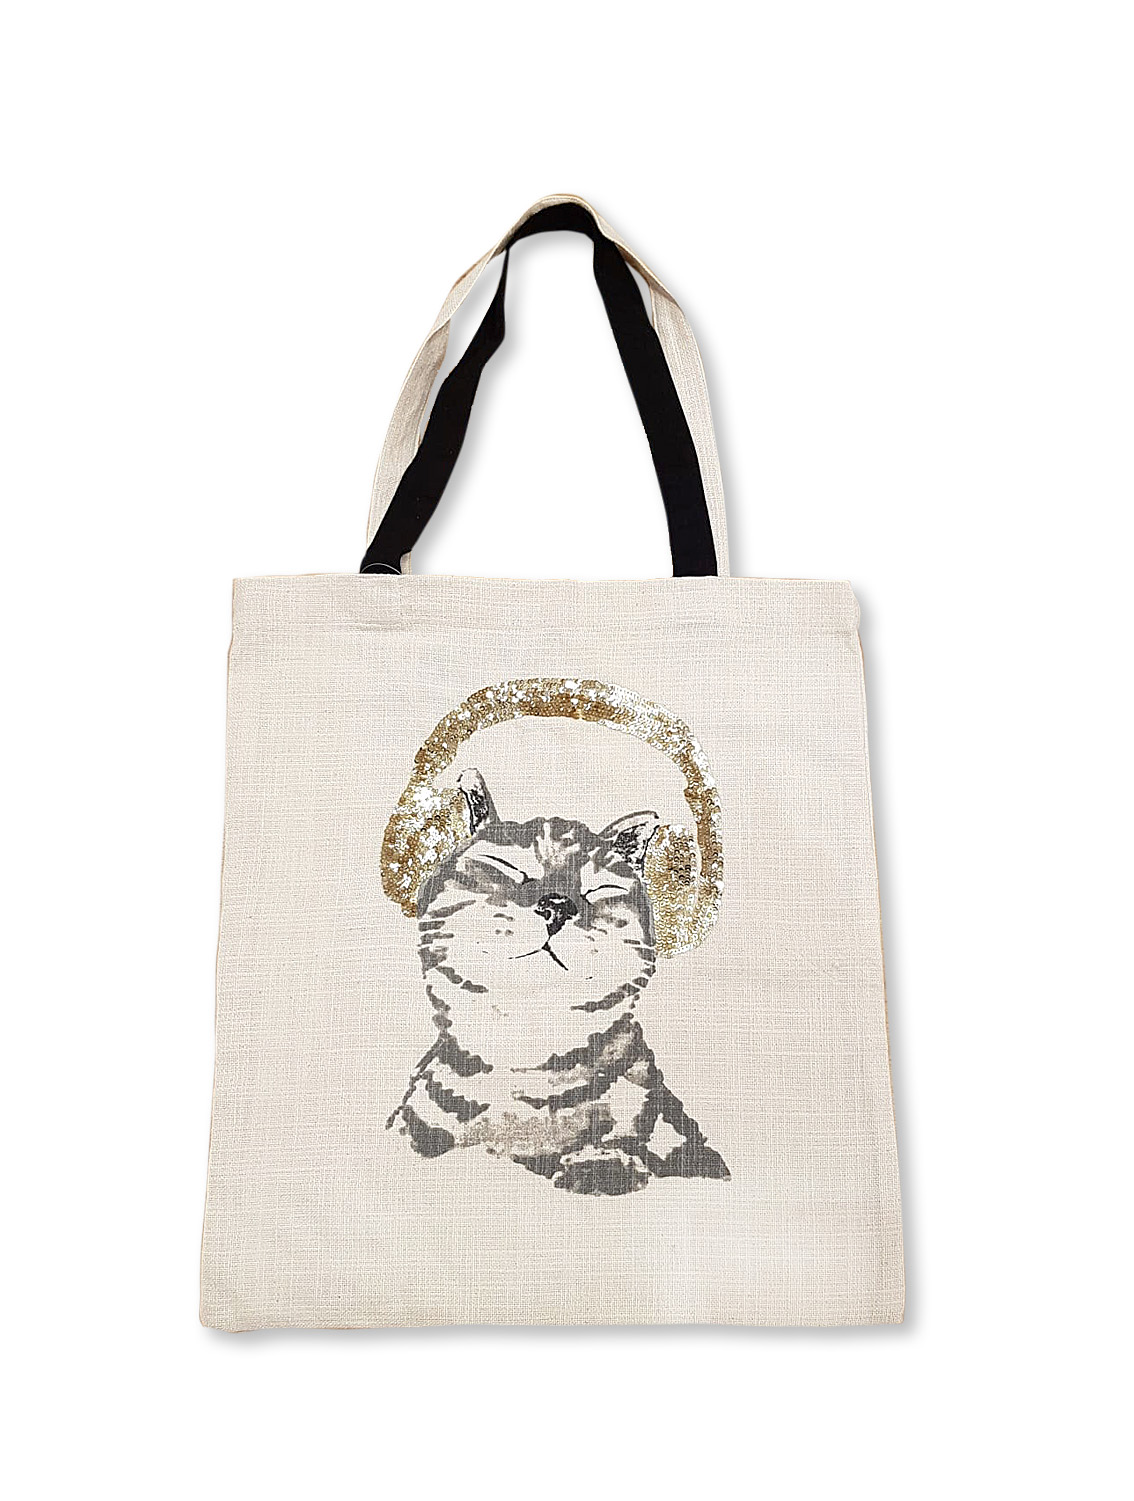 Tote Bag - epigrAM - Musical Animals Shopping Bag (doua modele) | Supplement DAM